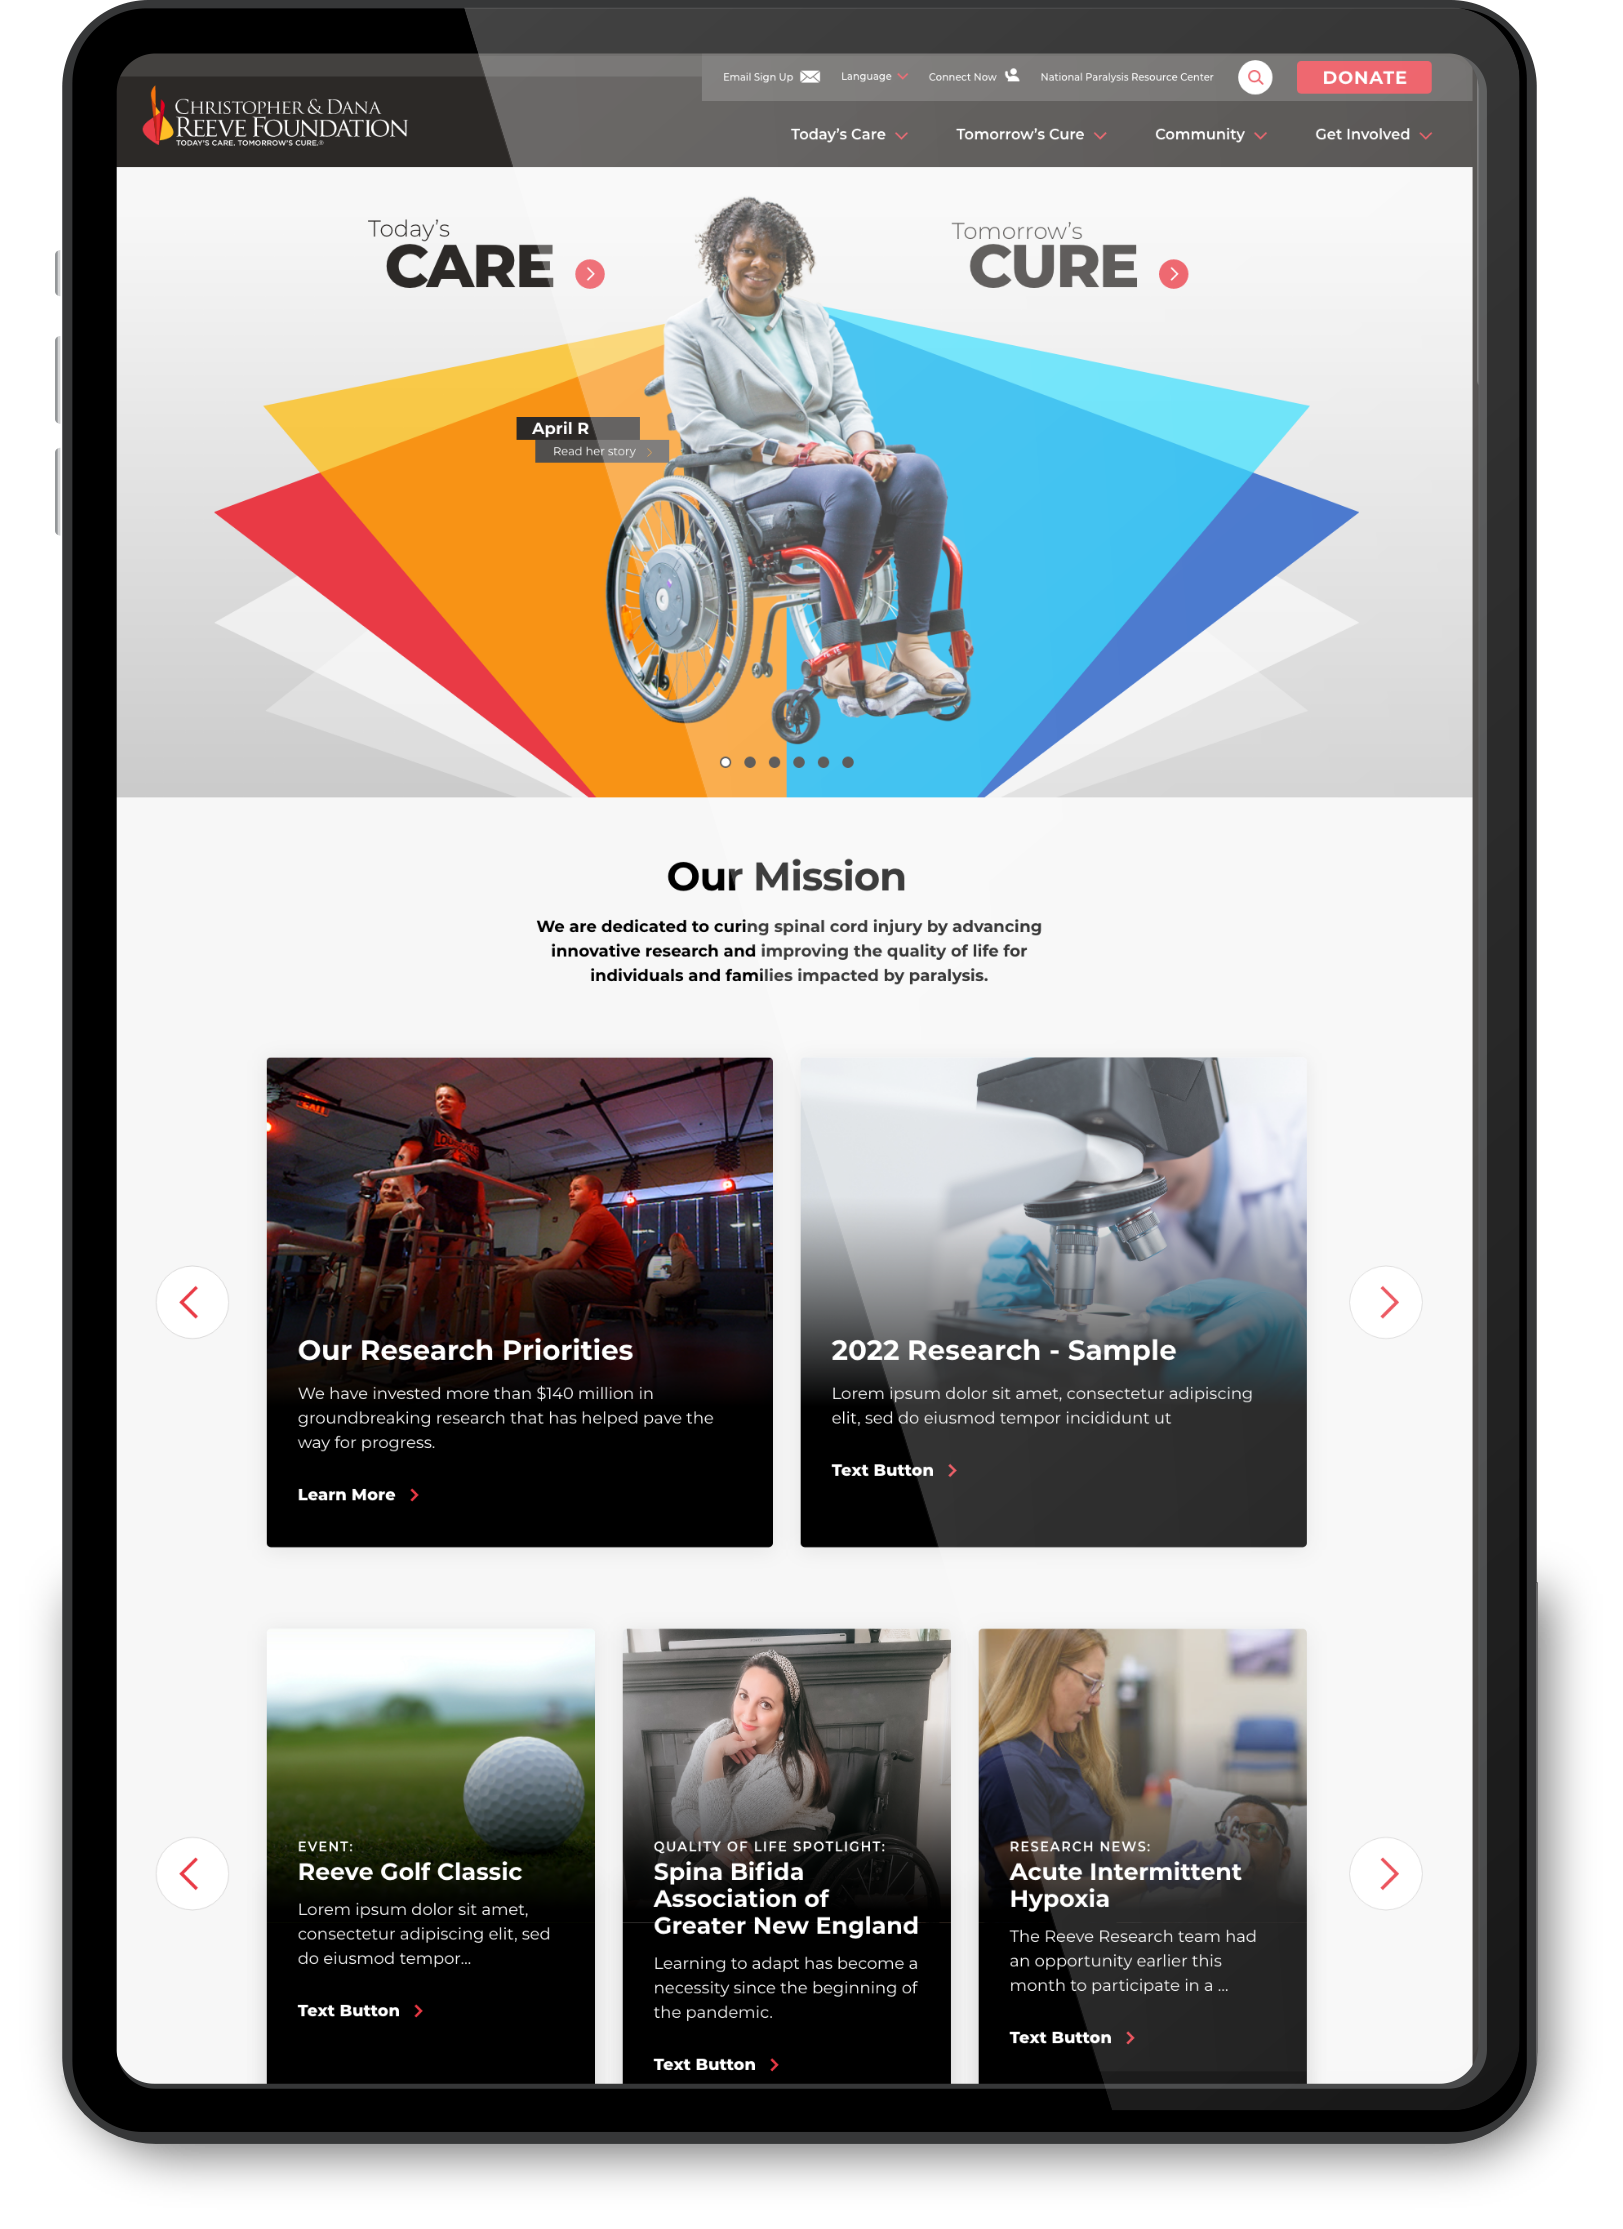 Christopher & Dana Reeve Foundation website displayed on an ipad